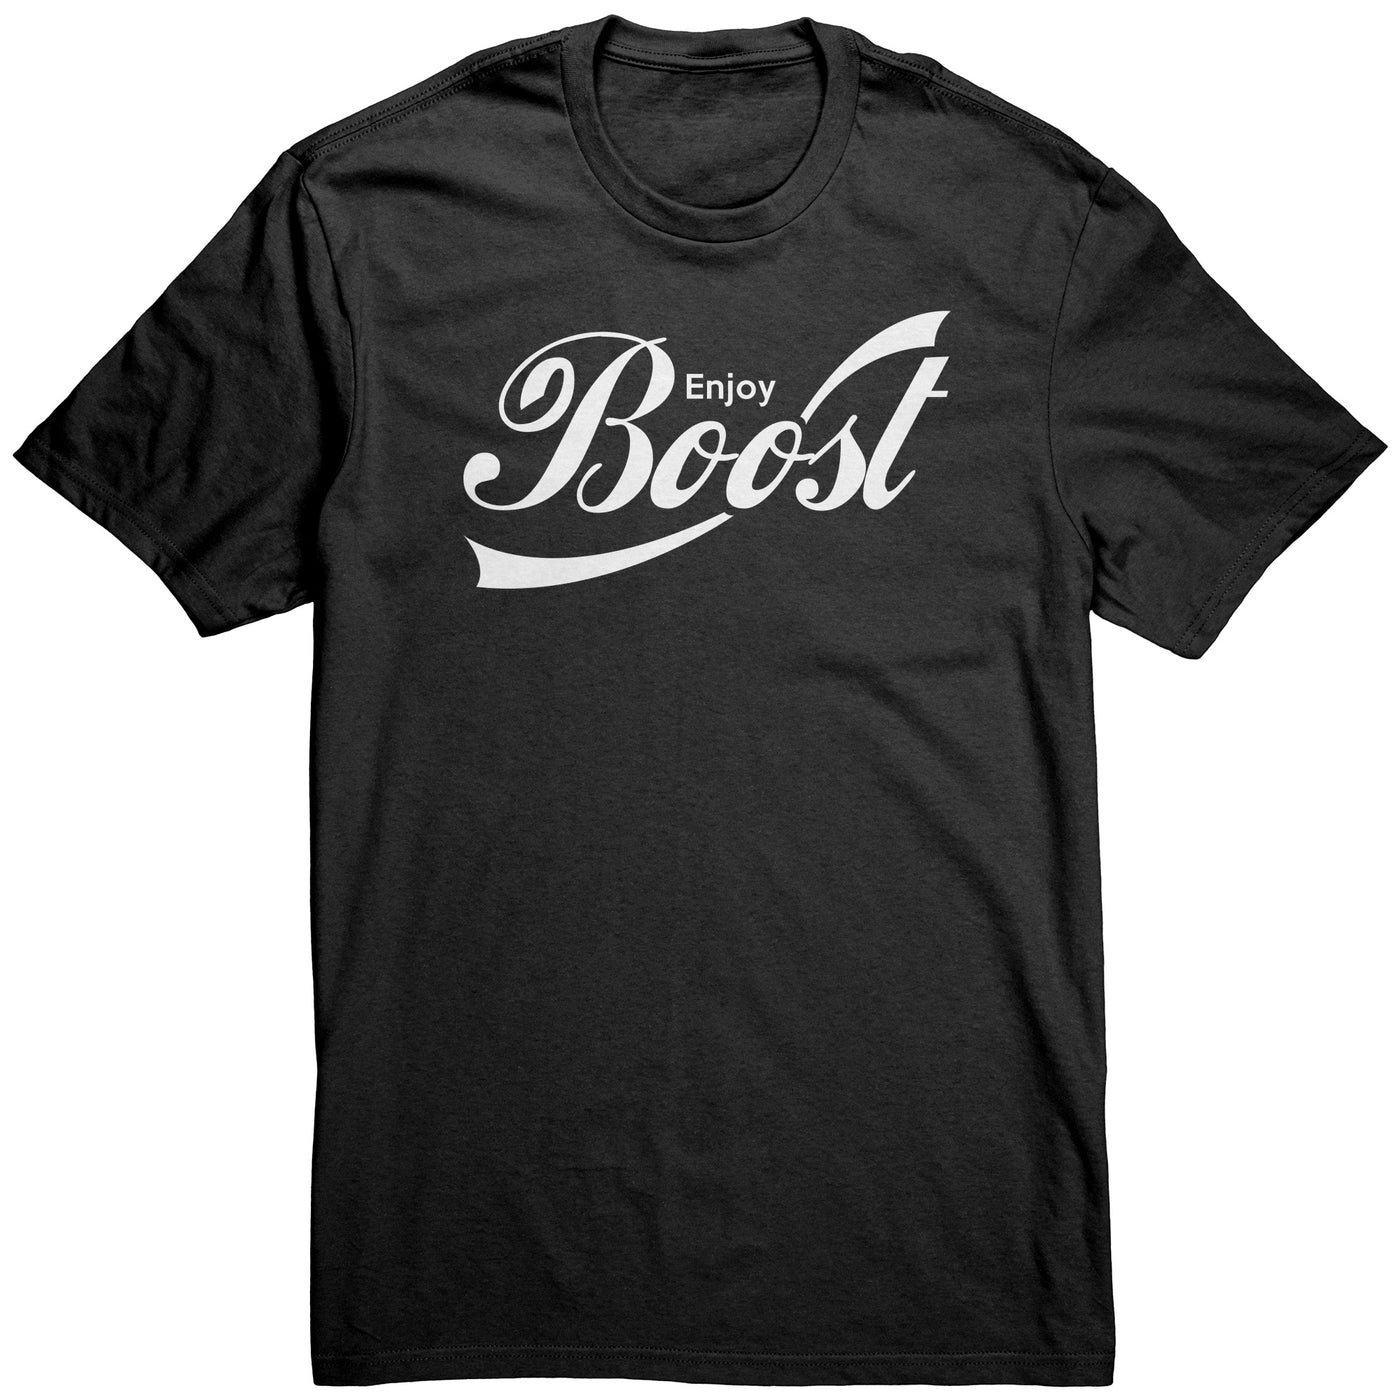 enjoy-boost-shirt-black